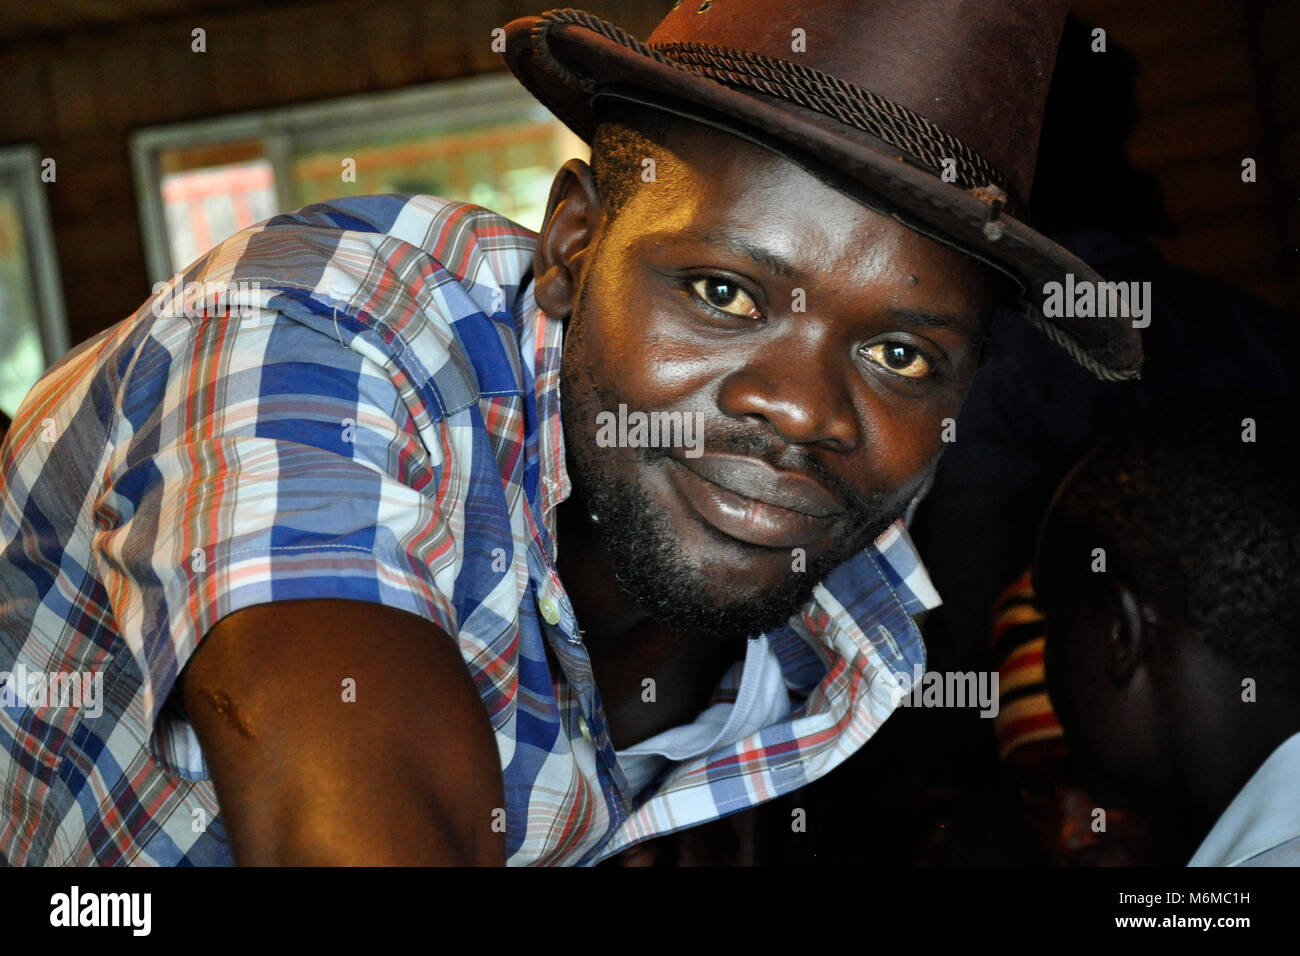 Democratic Republic of Congo, Portrait of a young man Stock Photo